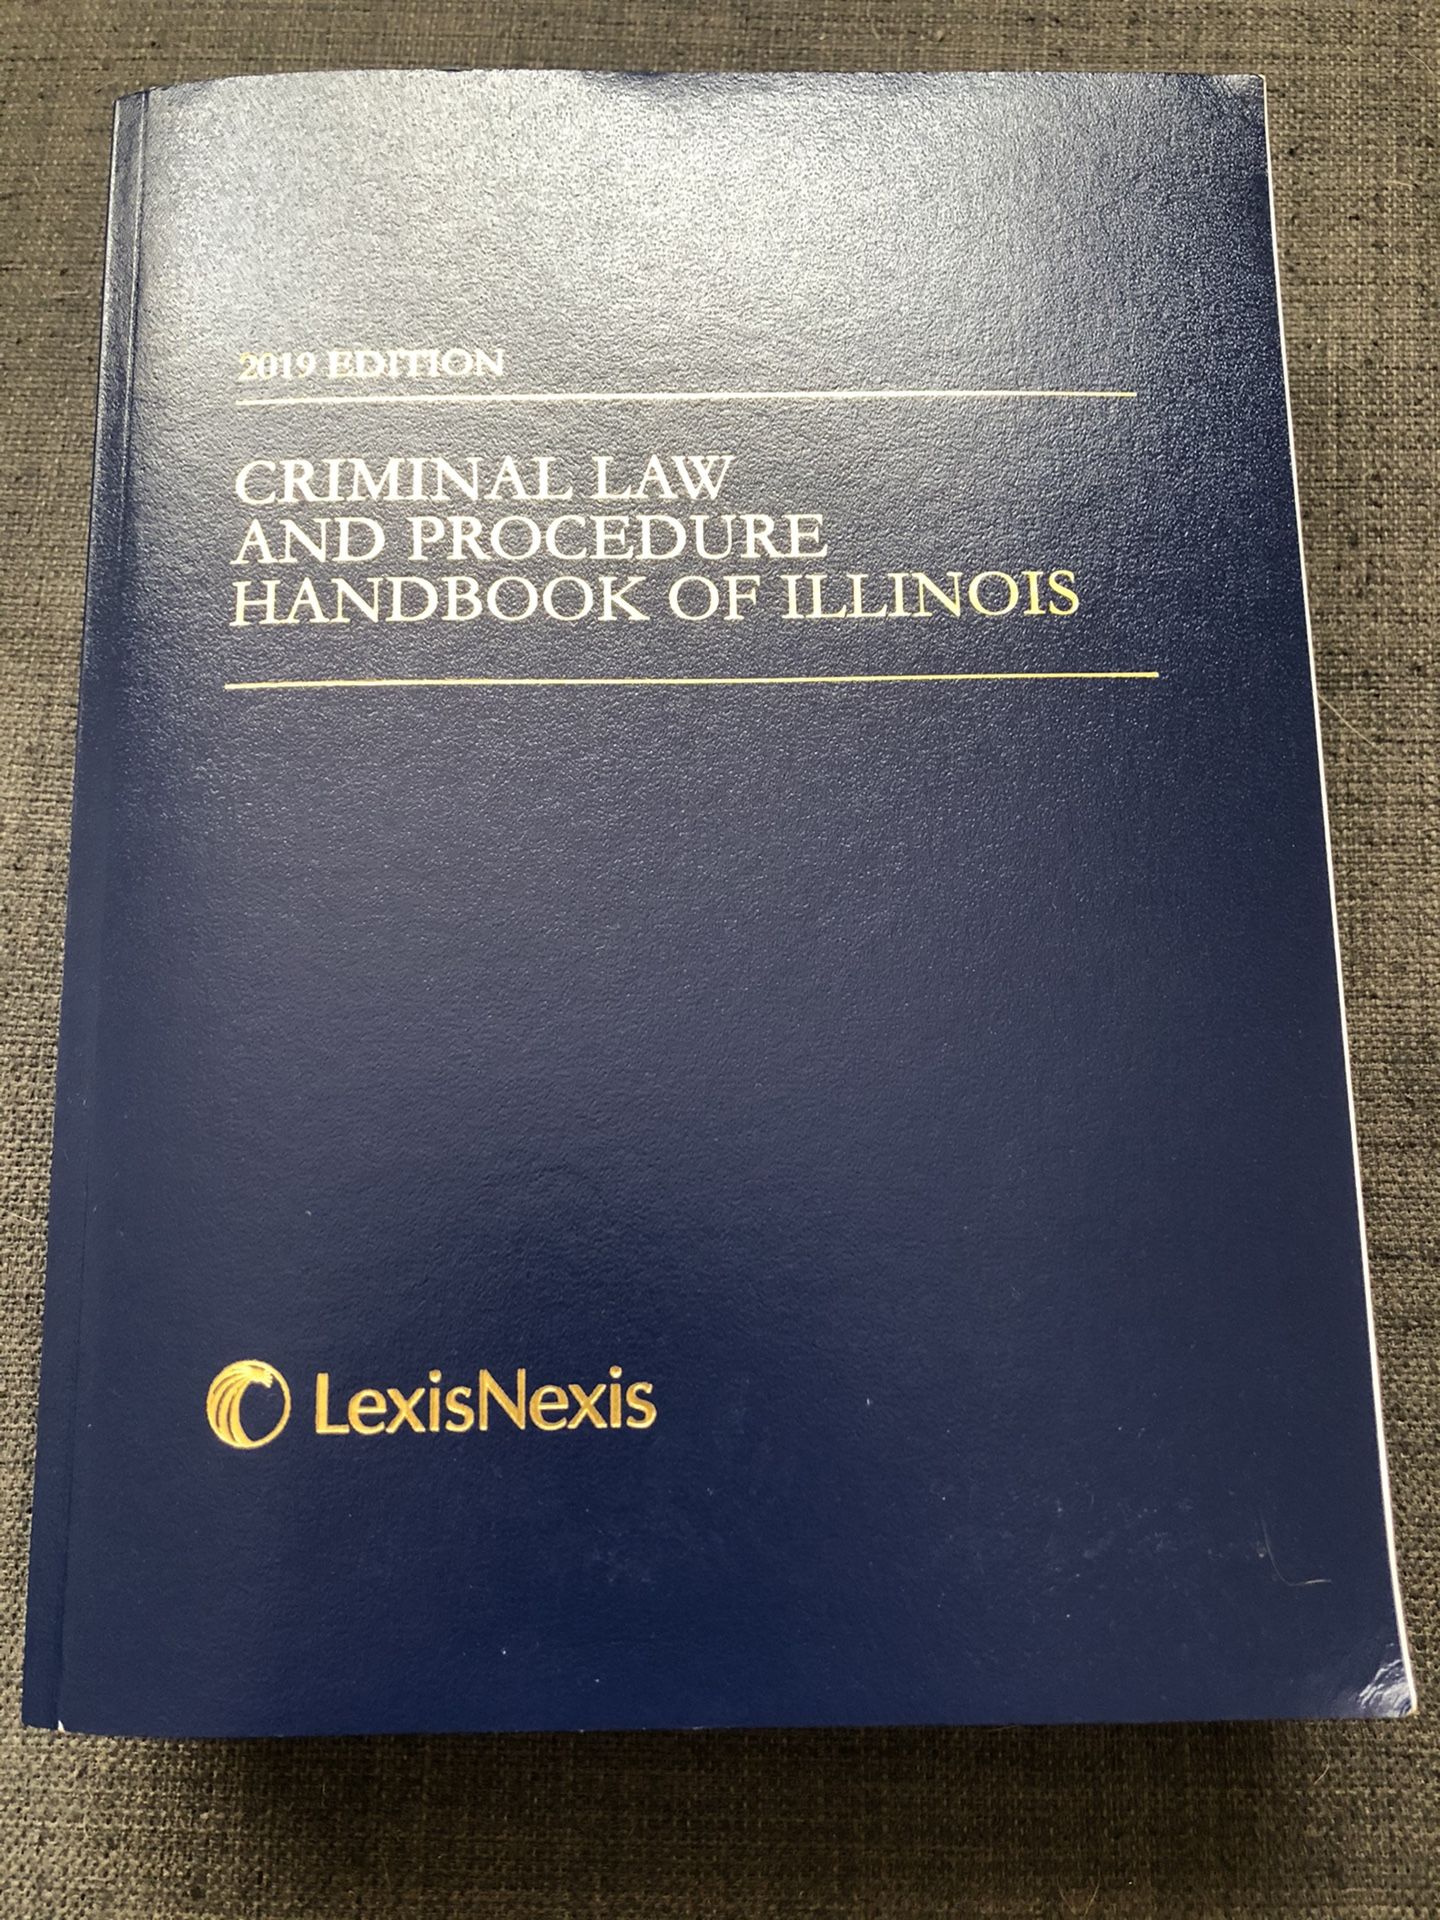 Criminal law and procedure handbook of Illinois